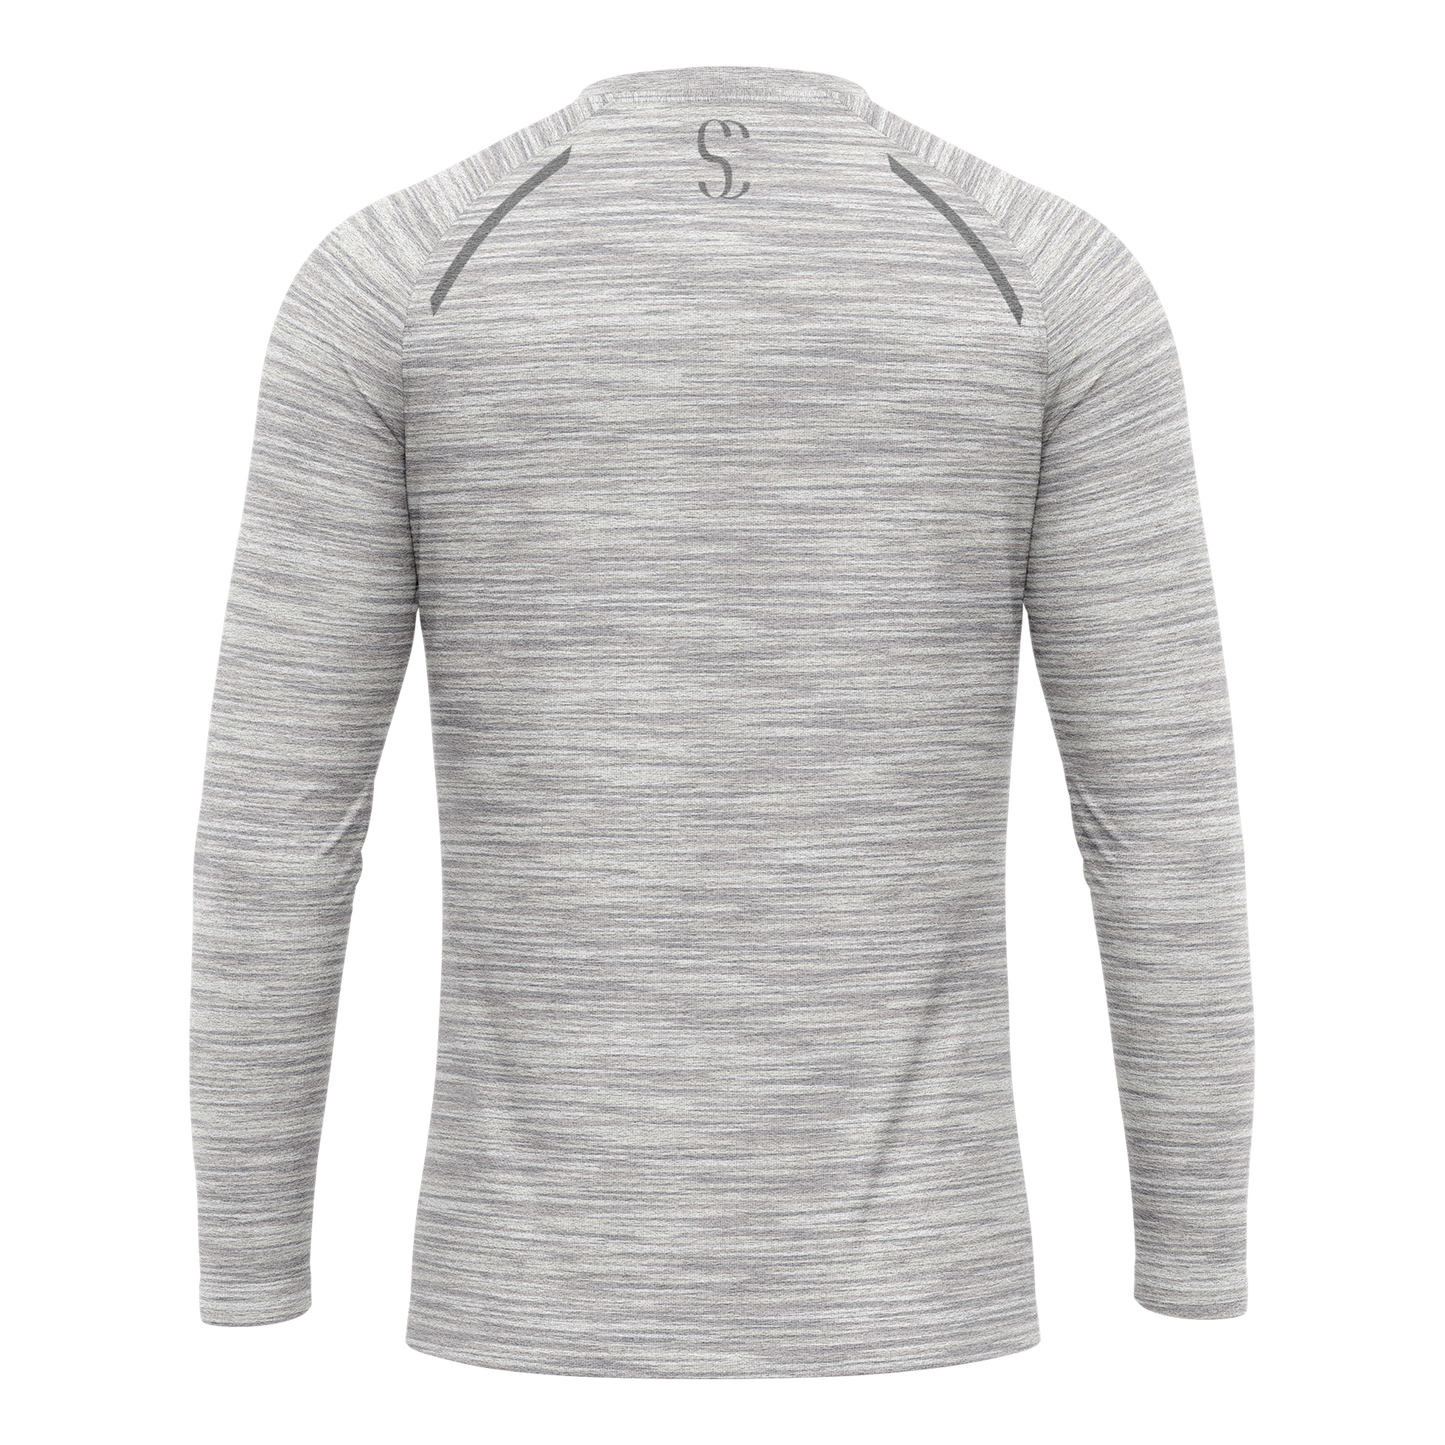 Men's White Long Sleeve Thermal T-Shirt